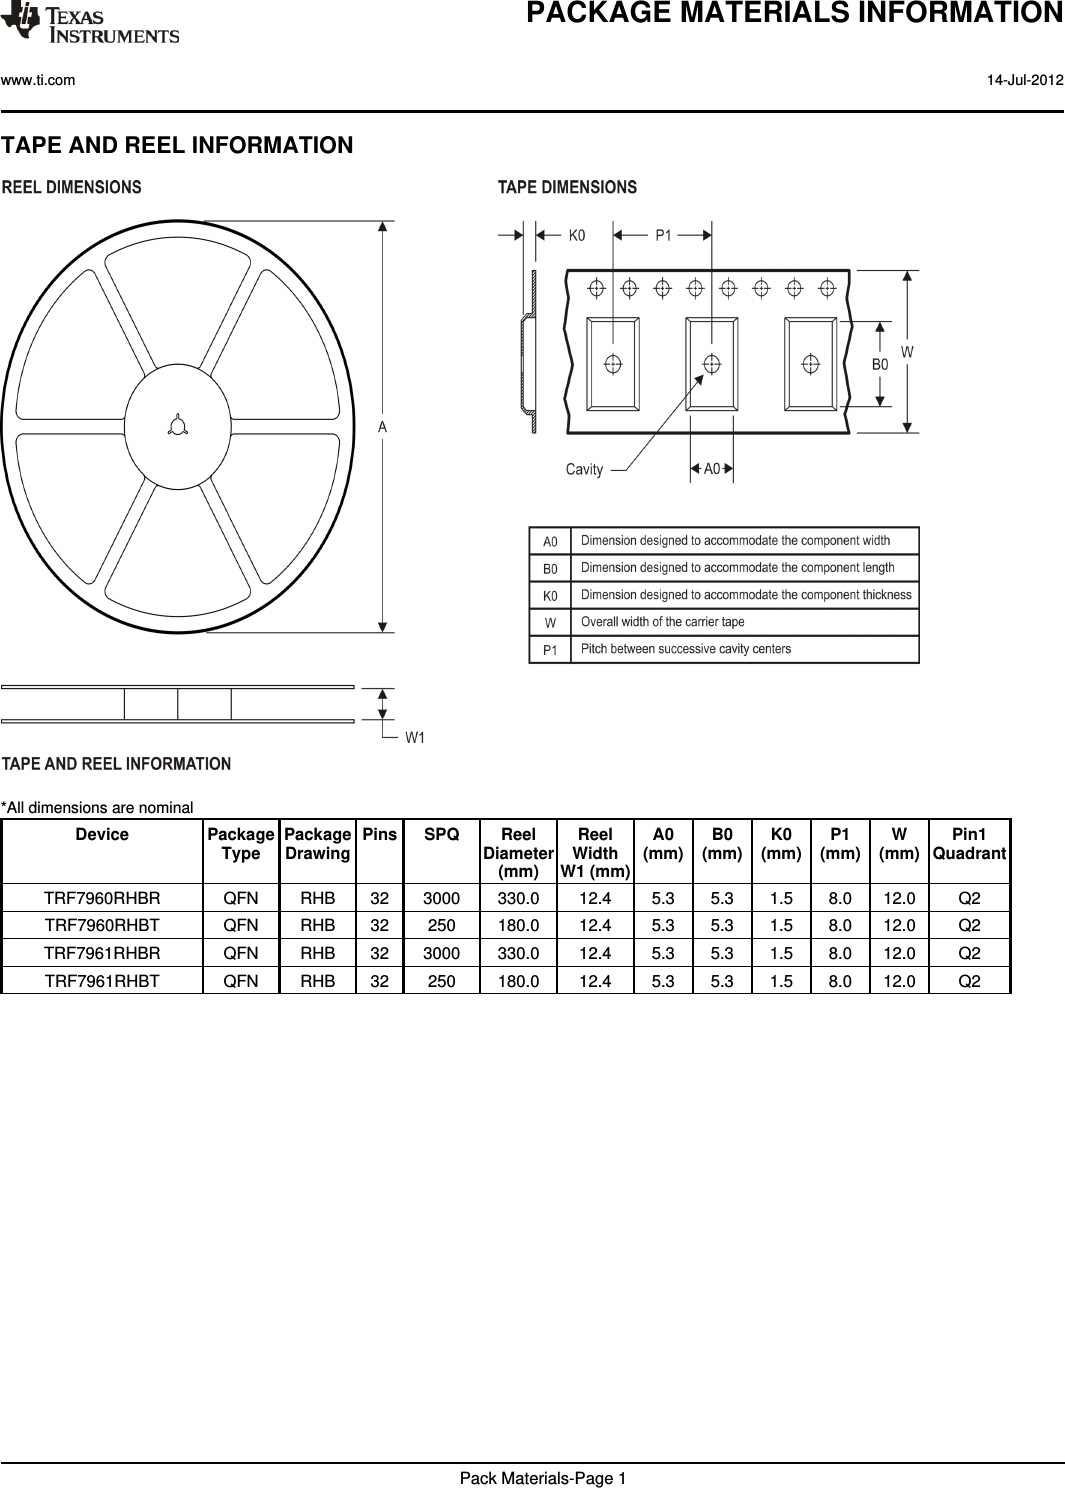 TAPE AND REEL INFORMATION*All dimensions are nominalDevice PackageType PackageDrawing Pins SPQ ReelDiameter(mm)ReelWidthW1 (mm)A0(mm) B0(mm) K0(mm) P1(mm) W(mm) Pin1QuadrantTRF7960RHBR QFN RHB 32 3000 330.0 12.4 5.3 5.3 1.5 8.0 12.0 Q2TRF7960RHBT QFN RHB 32 250 180.0 12.4 5.3 5.3 1.5 8.0 12.0 Q2TRF7961RHBR QFN RHB 32 3000 330.0 12.4 5.3 5.3 1.5 8.0 12.0 Q2TRF7961RHBT QFN RHB 32 250 180.0 12.4 5.3 5.3 1.5 8.0 12.0 Q2PACKAGE MATERIALS INFORMATIONwww.ti.com 14-Jul-2012Pack Materials-Page 1